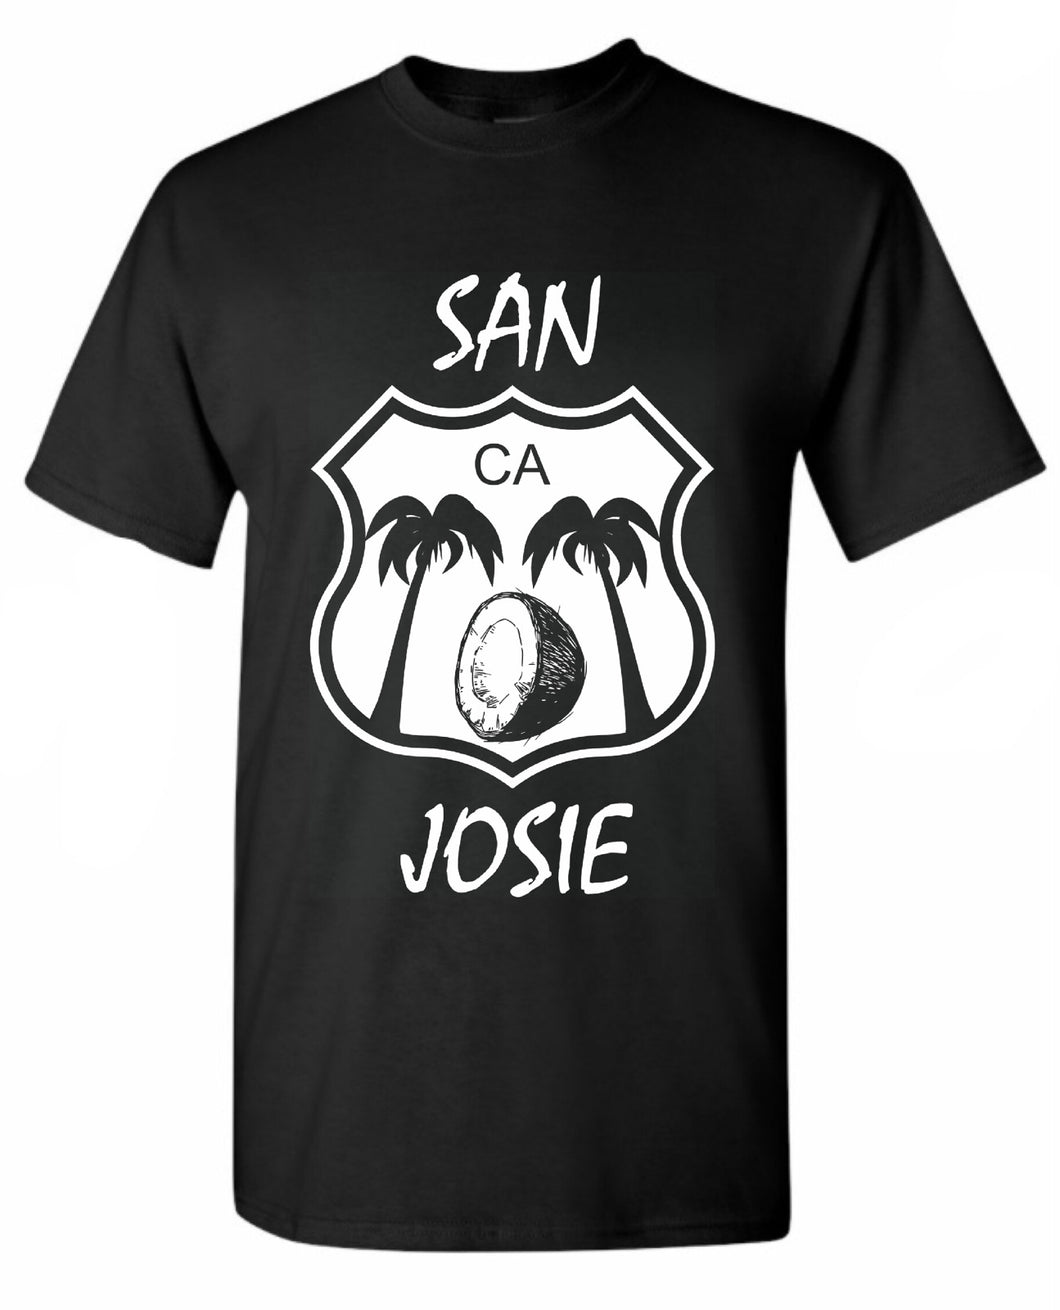 San Josie 101 T-shirt (Palm Trees & coconut)